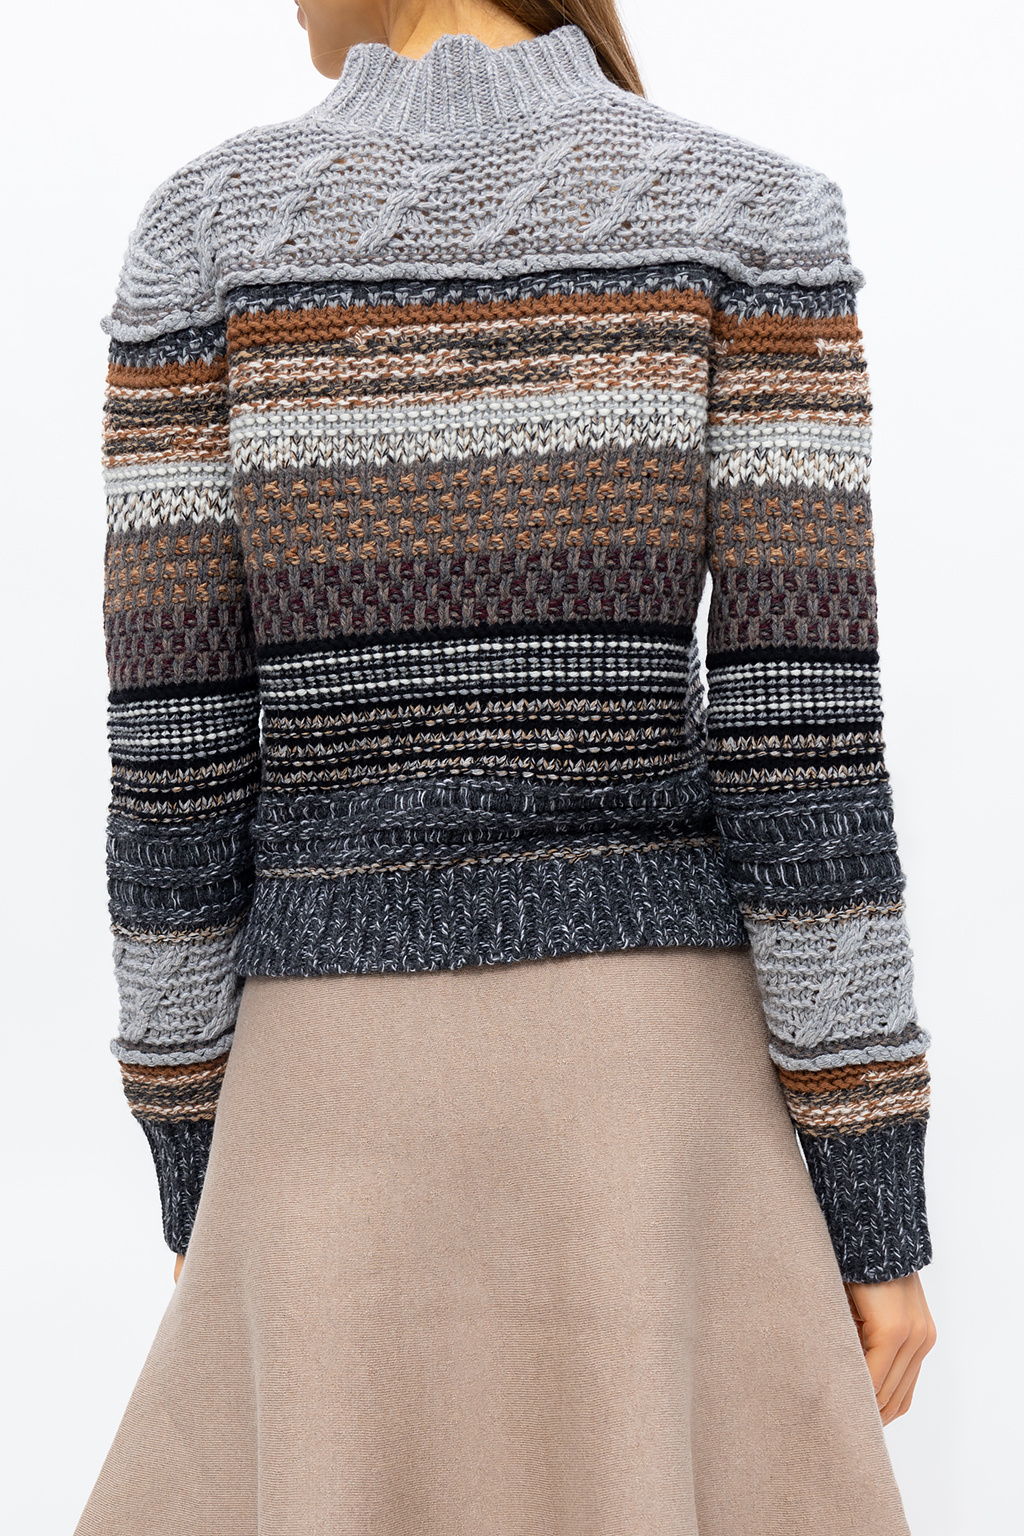 Chloé Wool sweater